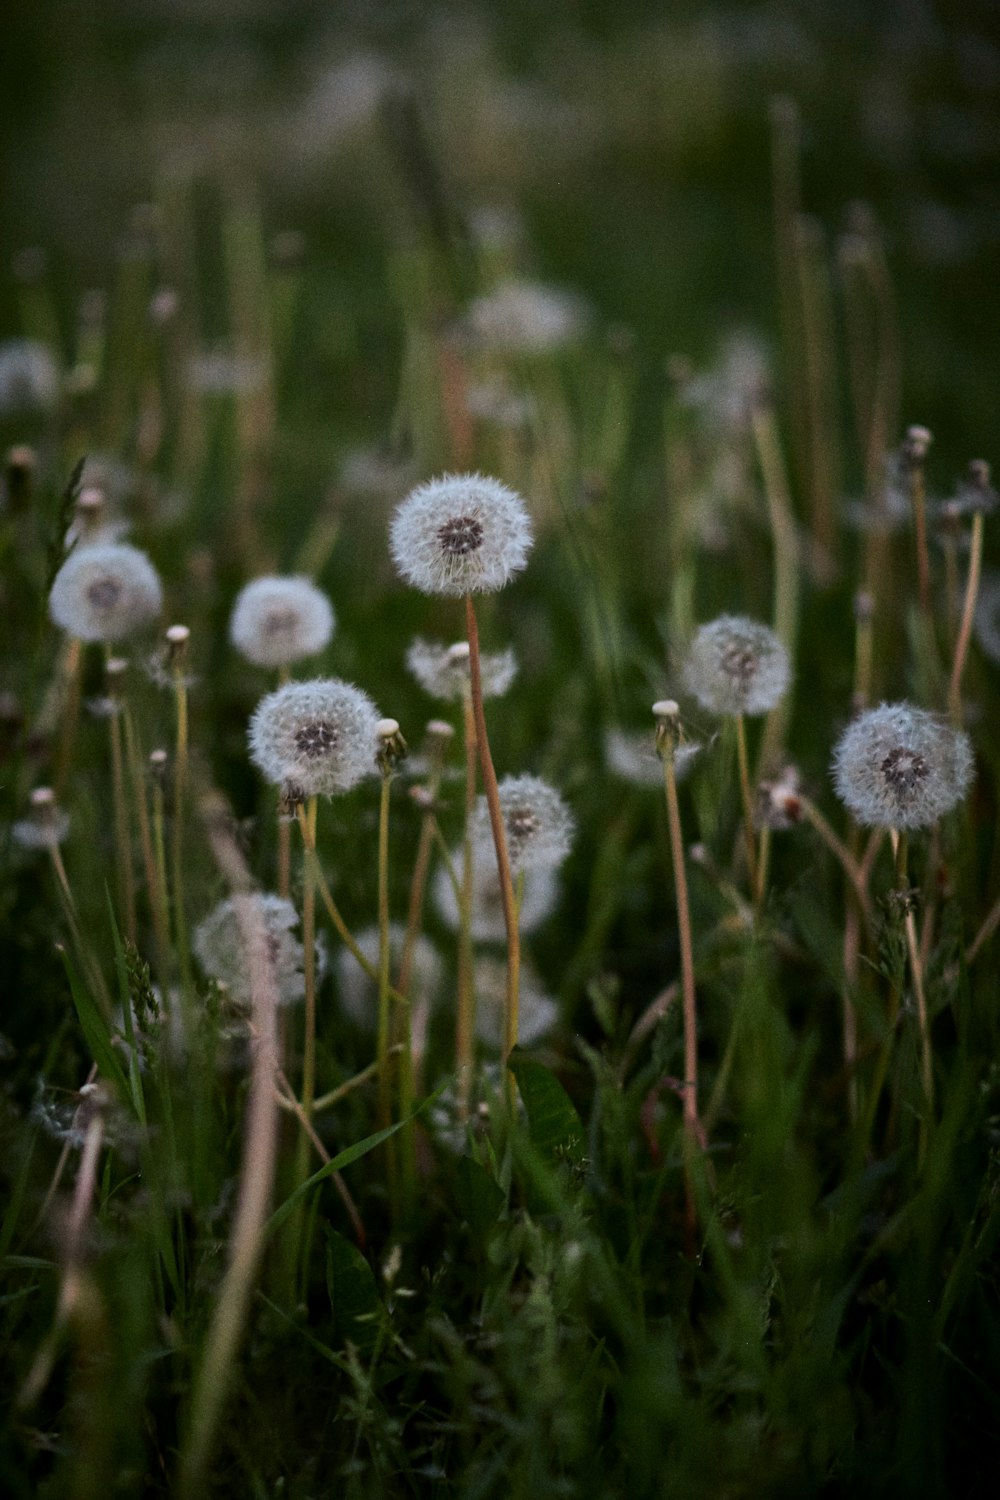 a group of dandelions in a field